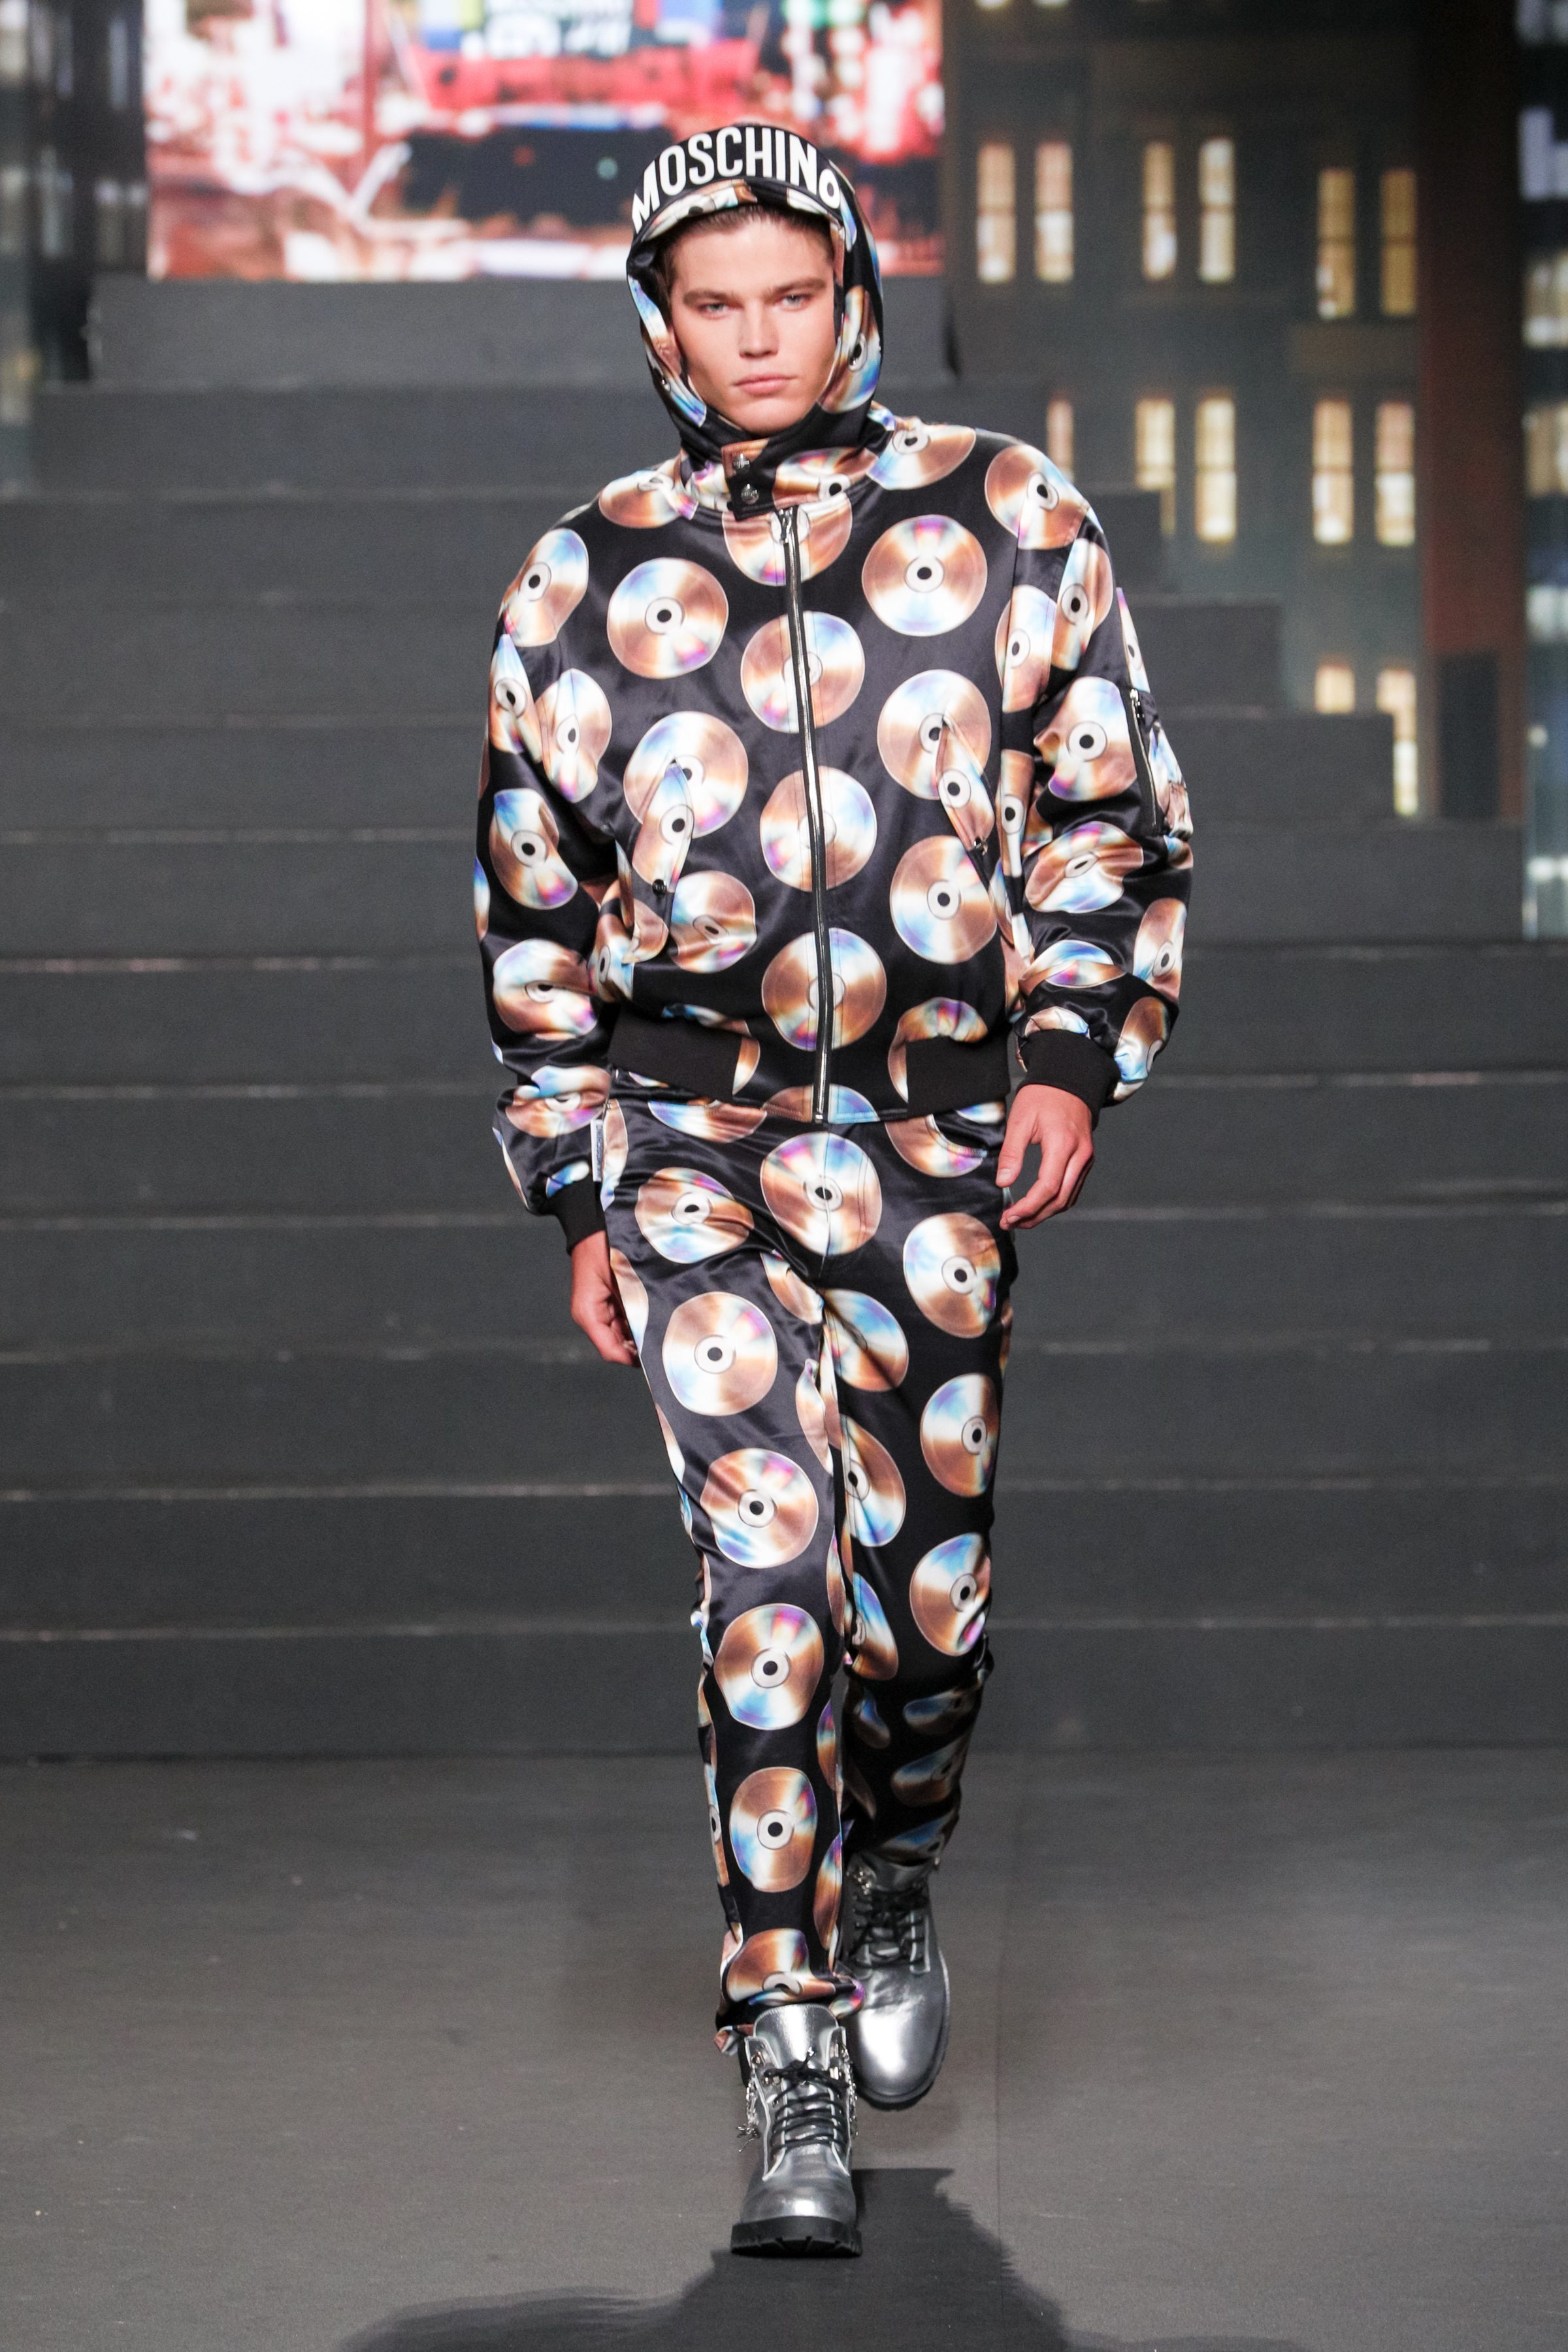 Jeremy Scott enflamme New York avec la collection Moschino [tv] x H&M